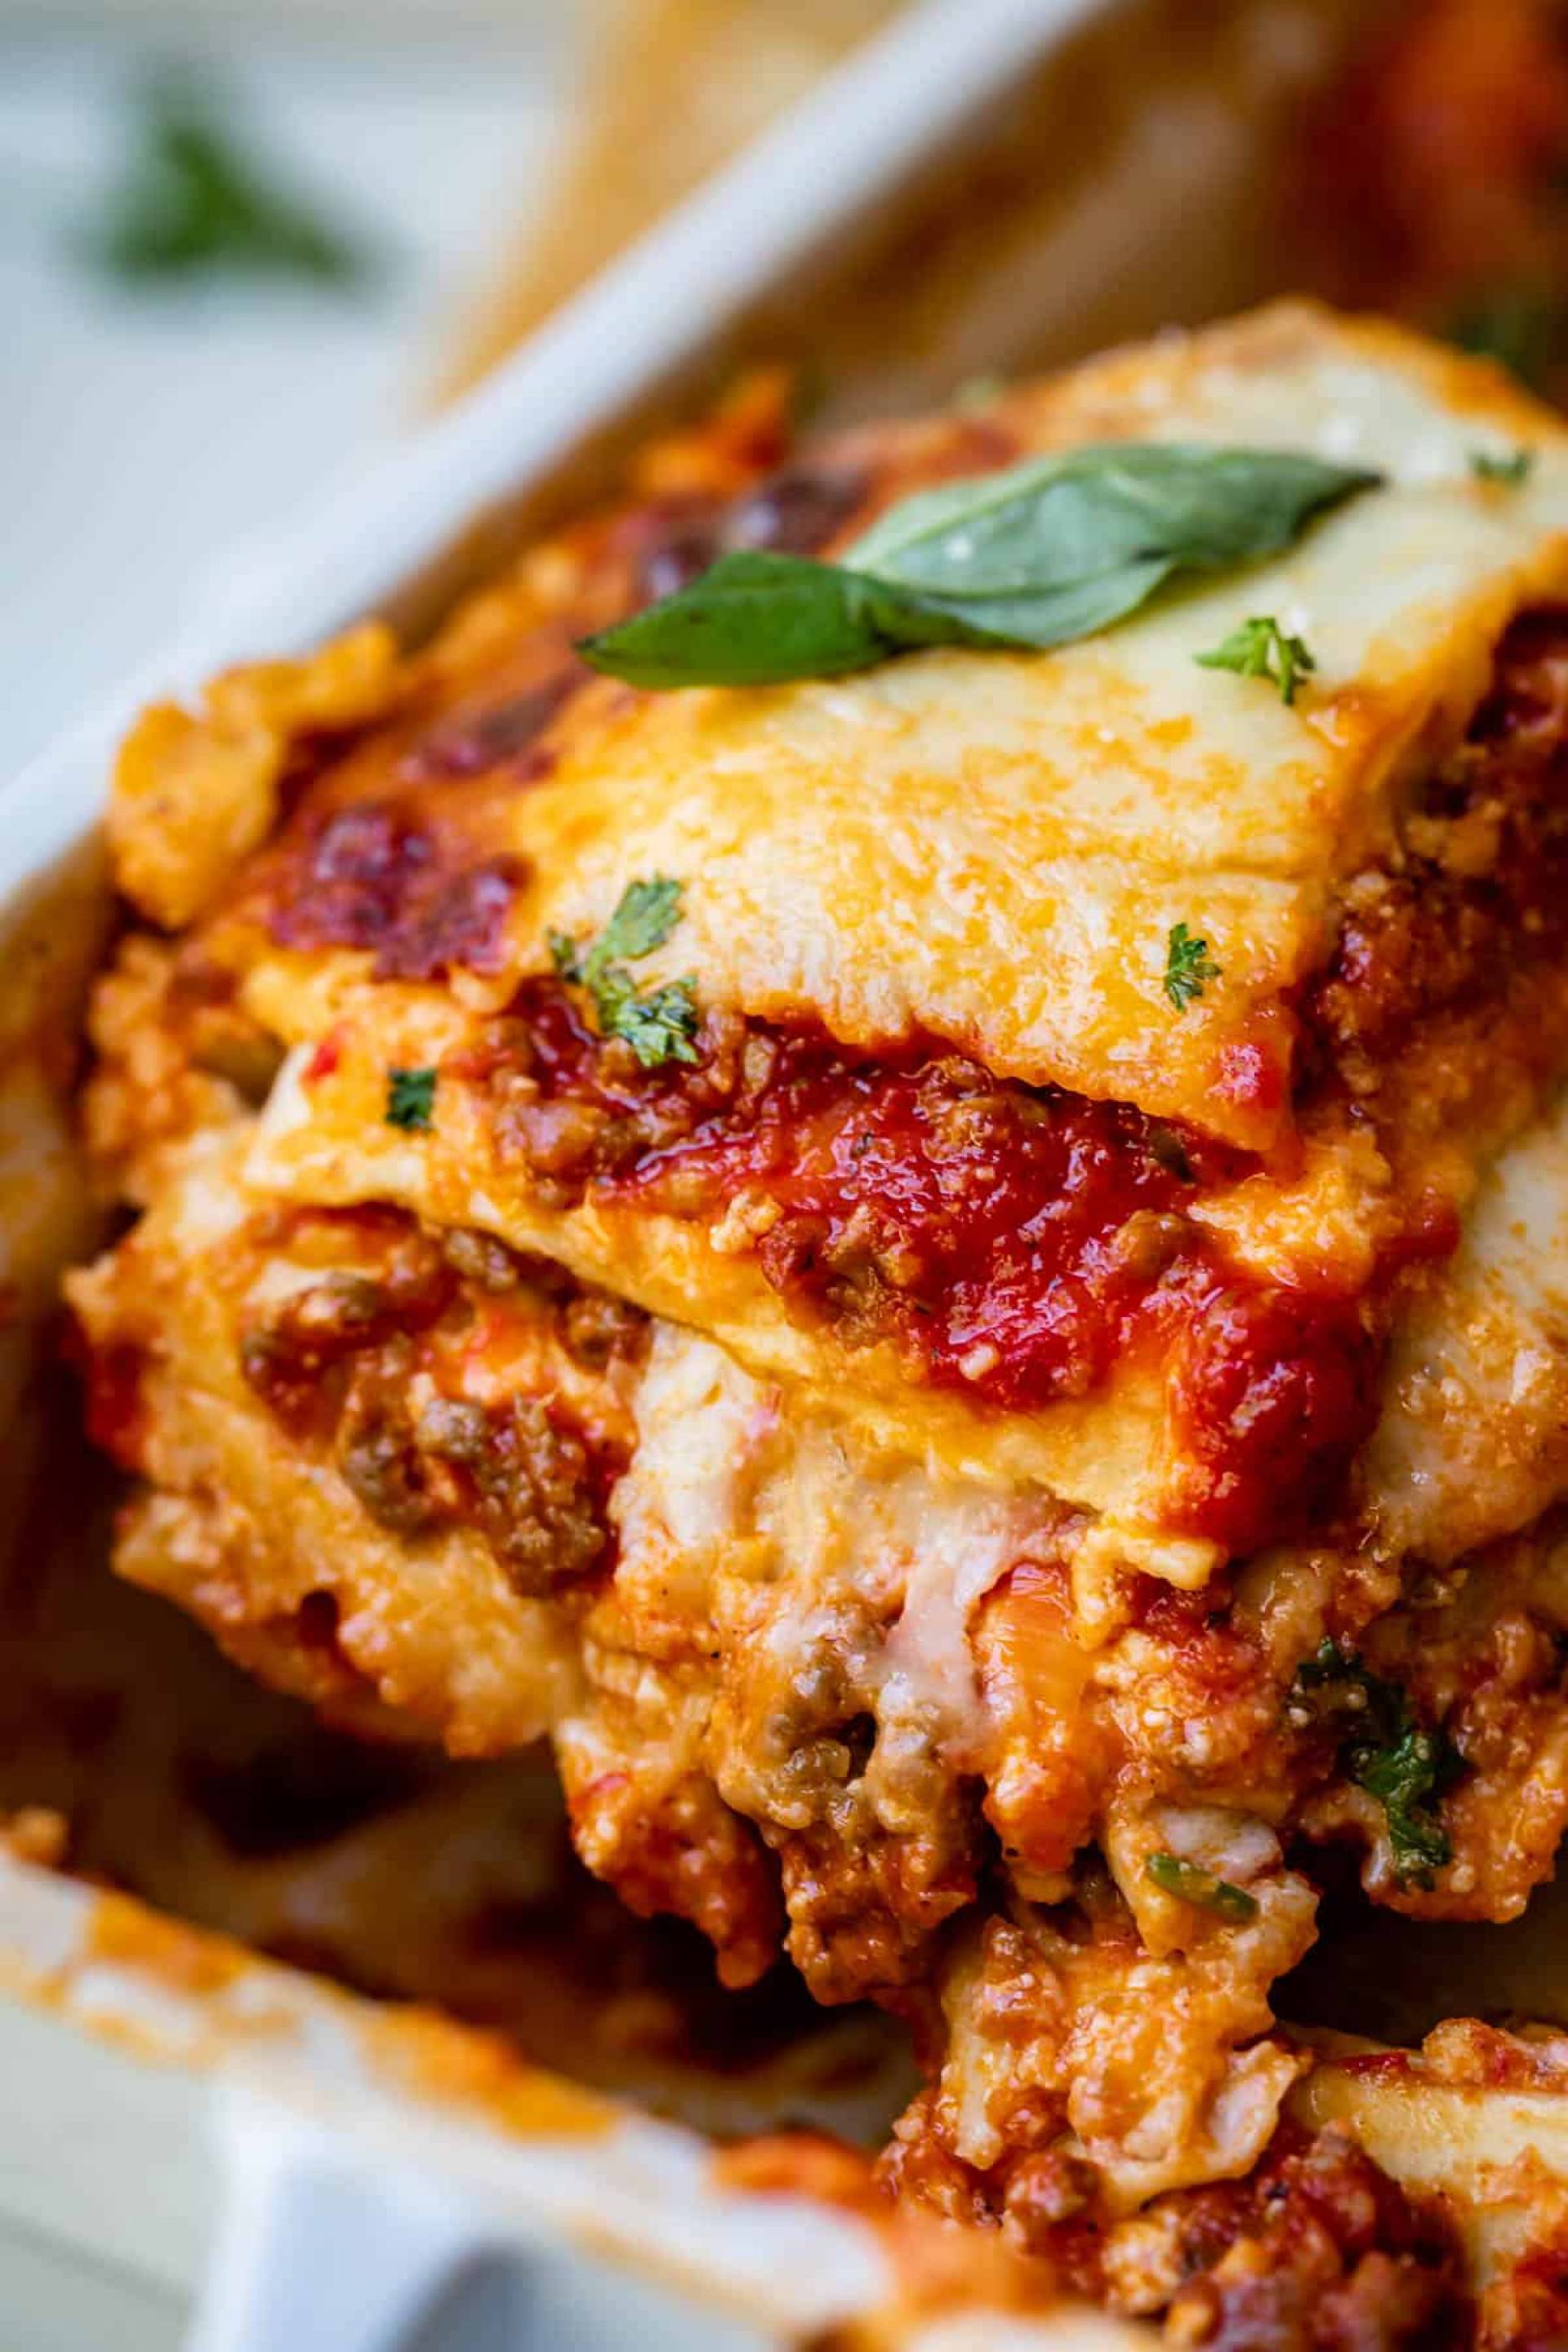 HEALTHY PORTION-Italian Lasagna w/Grass-Fed Beef, Marinara Sauce, Mozzarella Cheese & Broccoli.